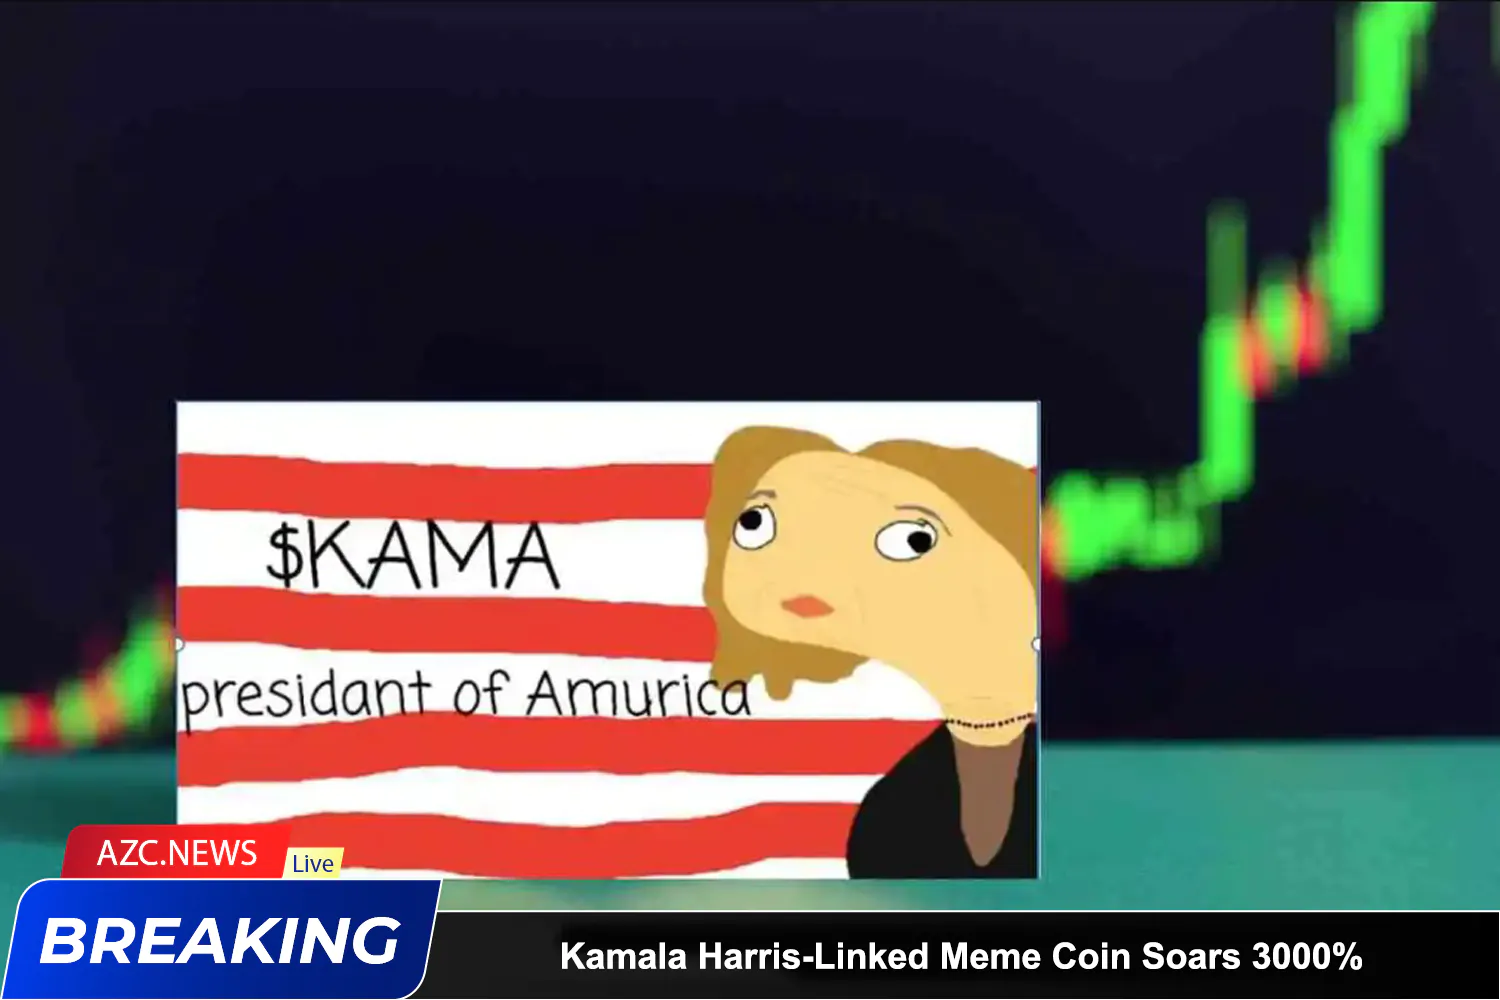 Azcnews Kamala Harris Linked Meme Coin Soars 3000%